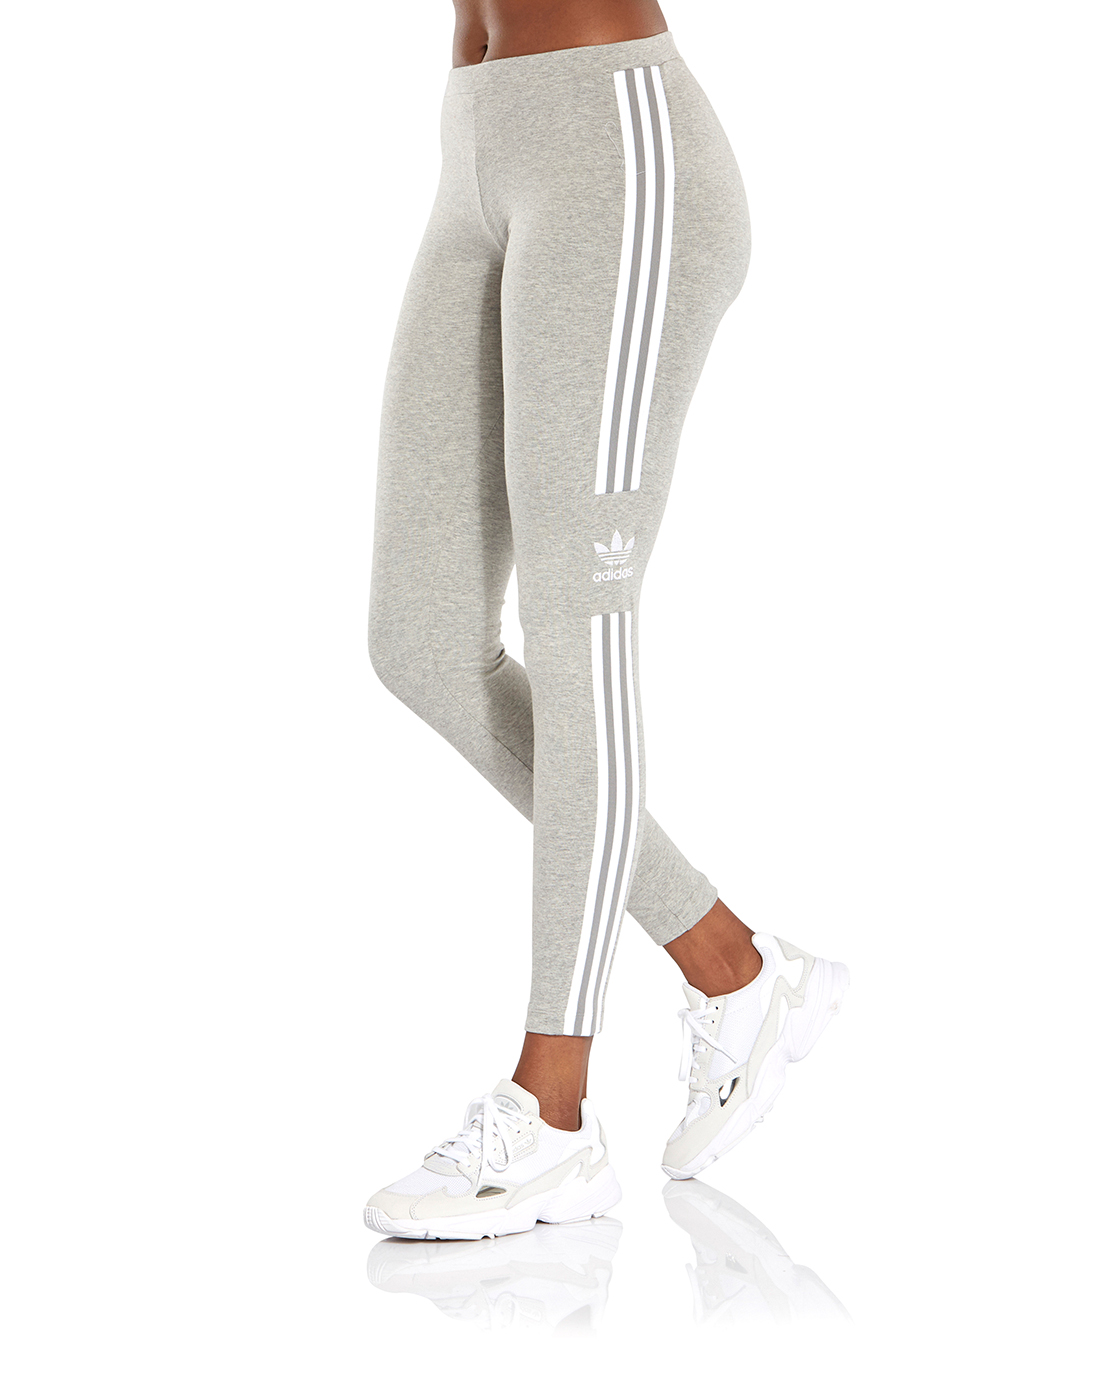 women's adidas gray leggings